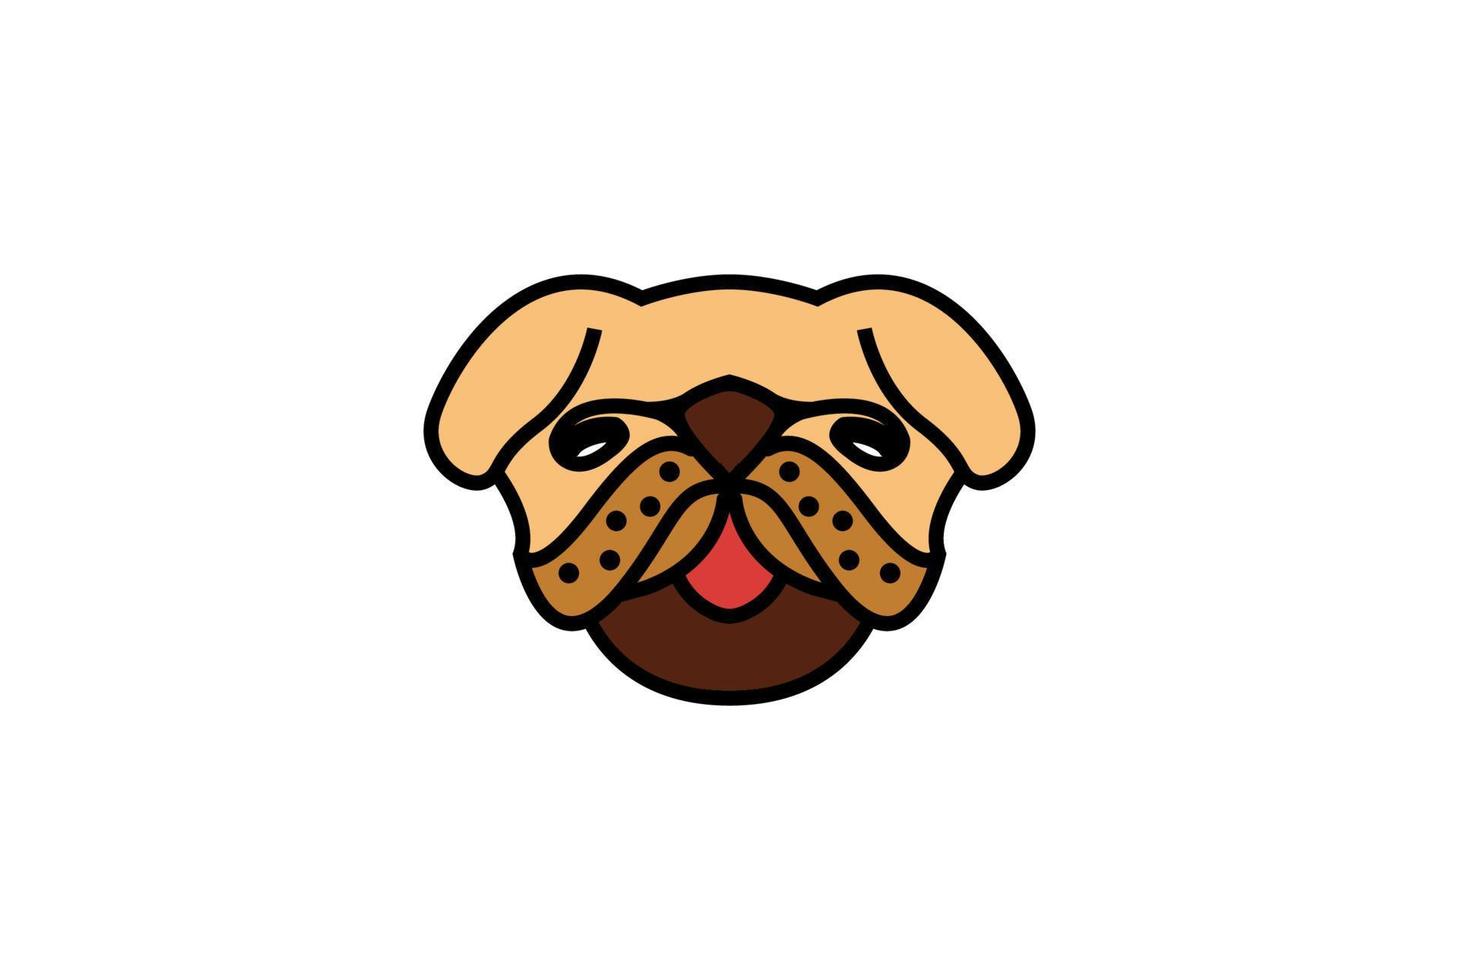 farbenfroher, süßer, lustiger Pitbull-Hund, Kopf, Gesicht, Logo, Design, Vektor